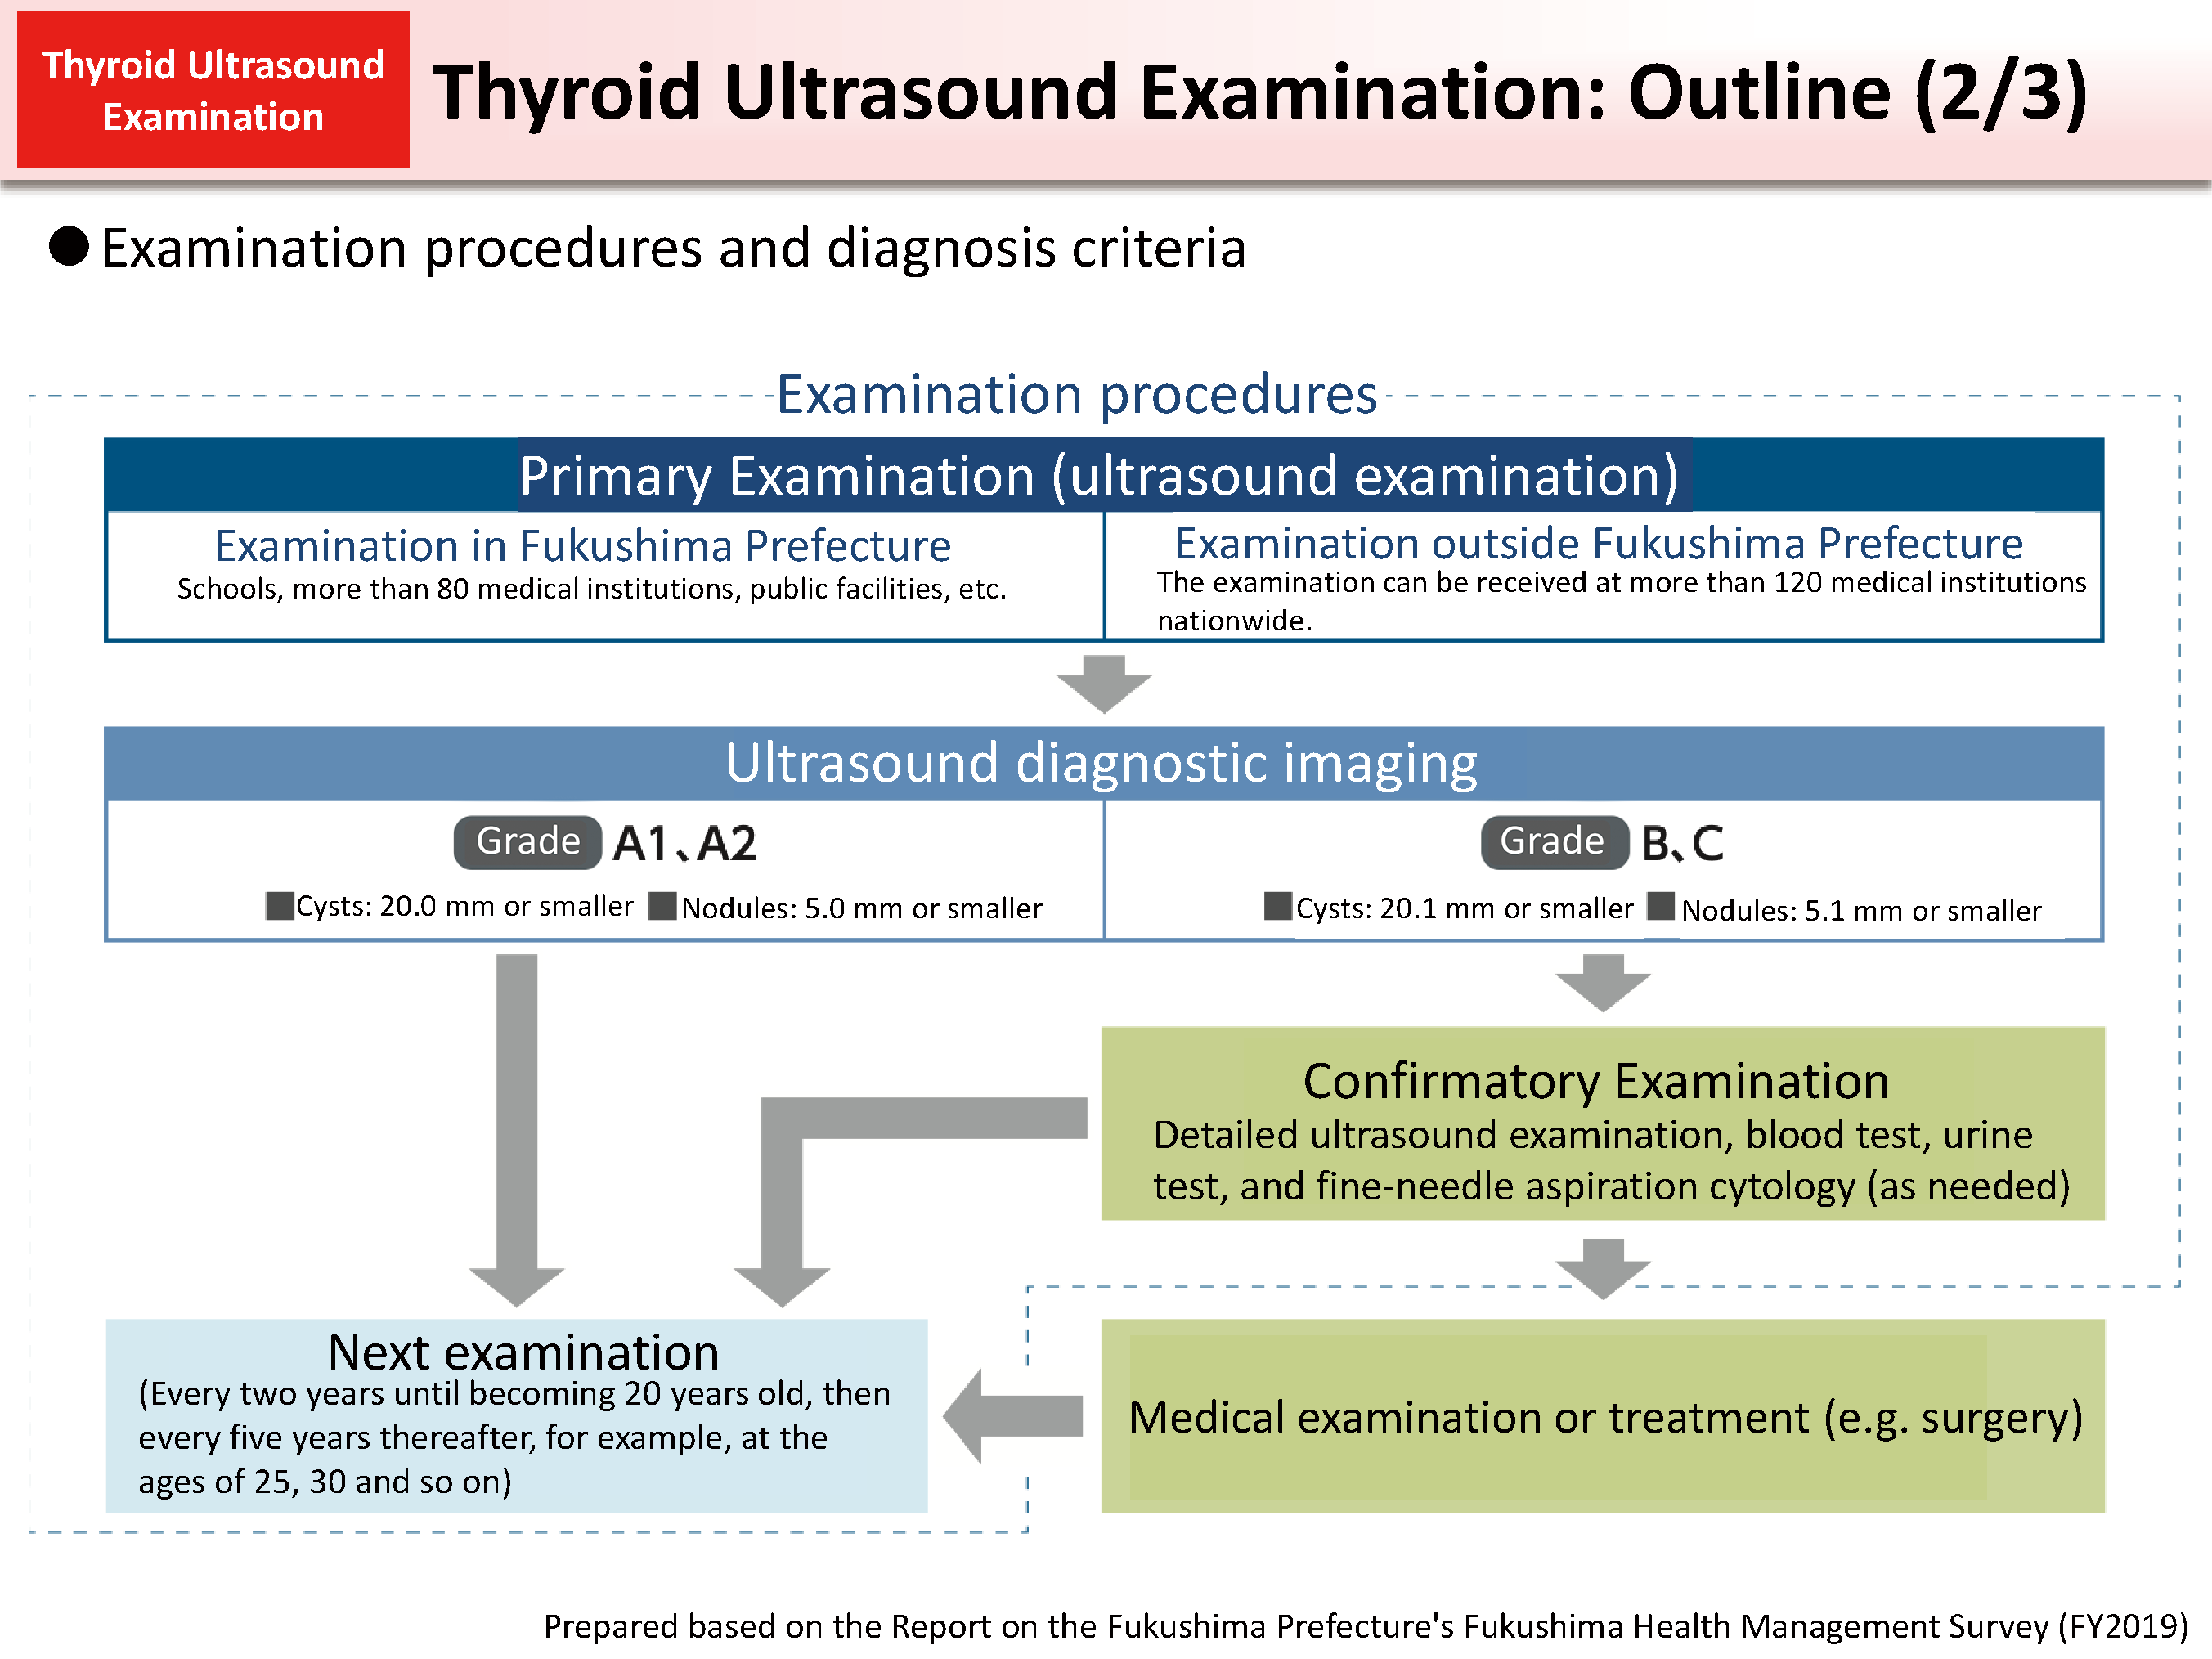 Thyroid Ultrasound Examination: Outline (2/3)_Figure